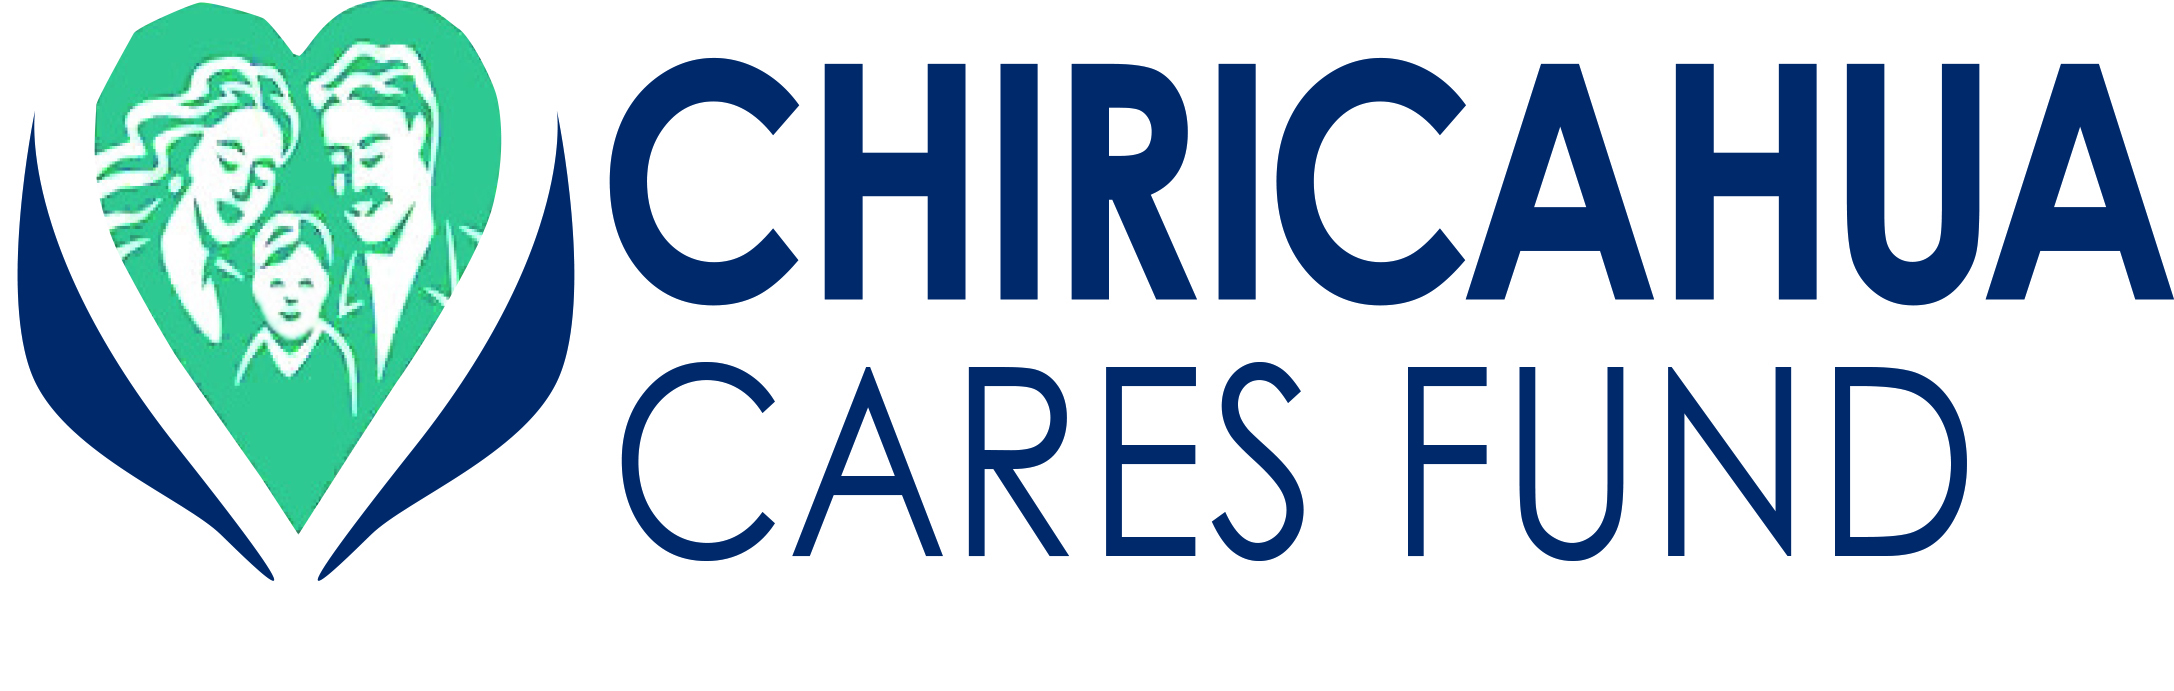 Chiricahua Cares Fund